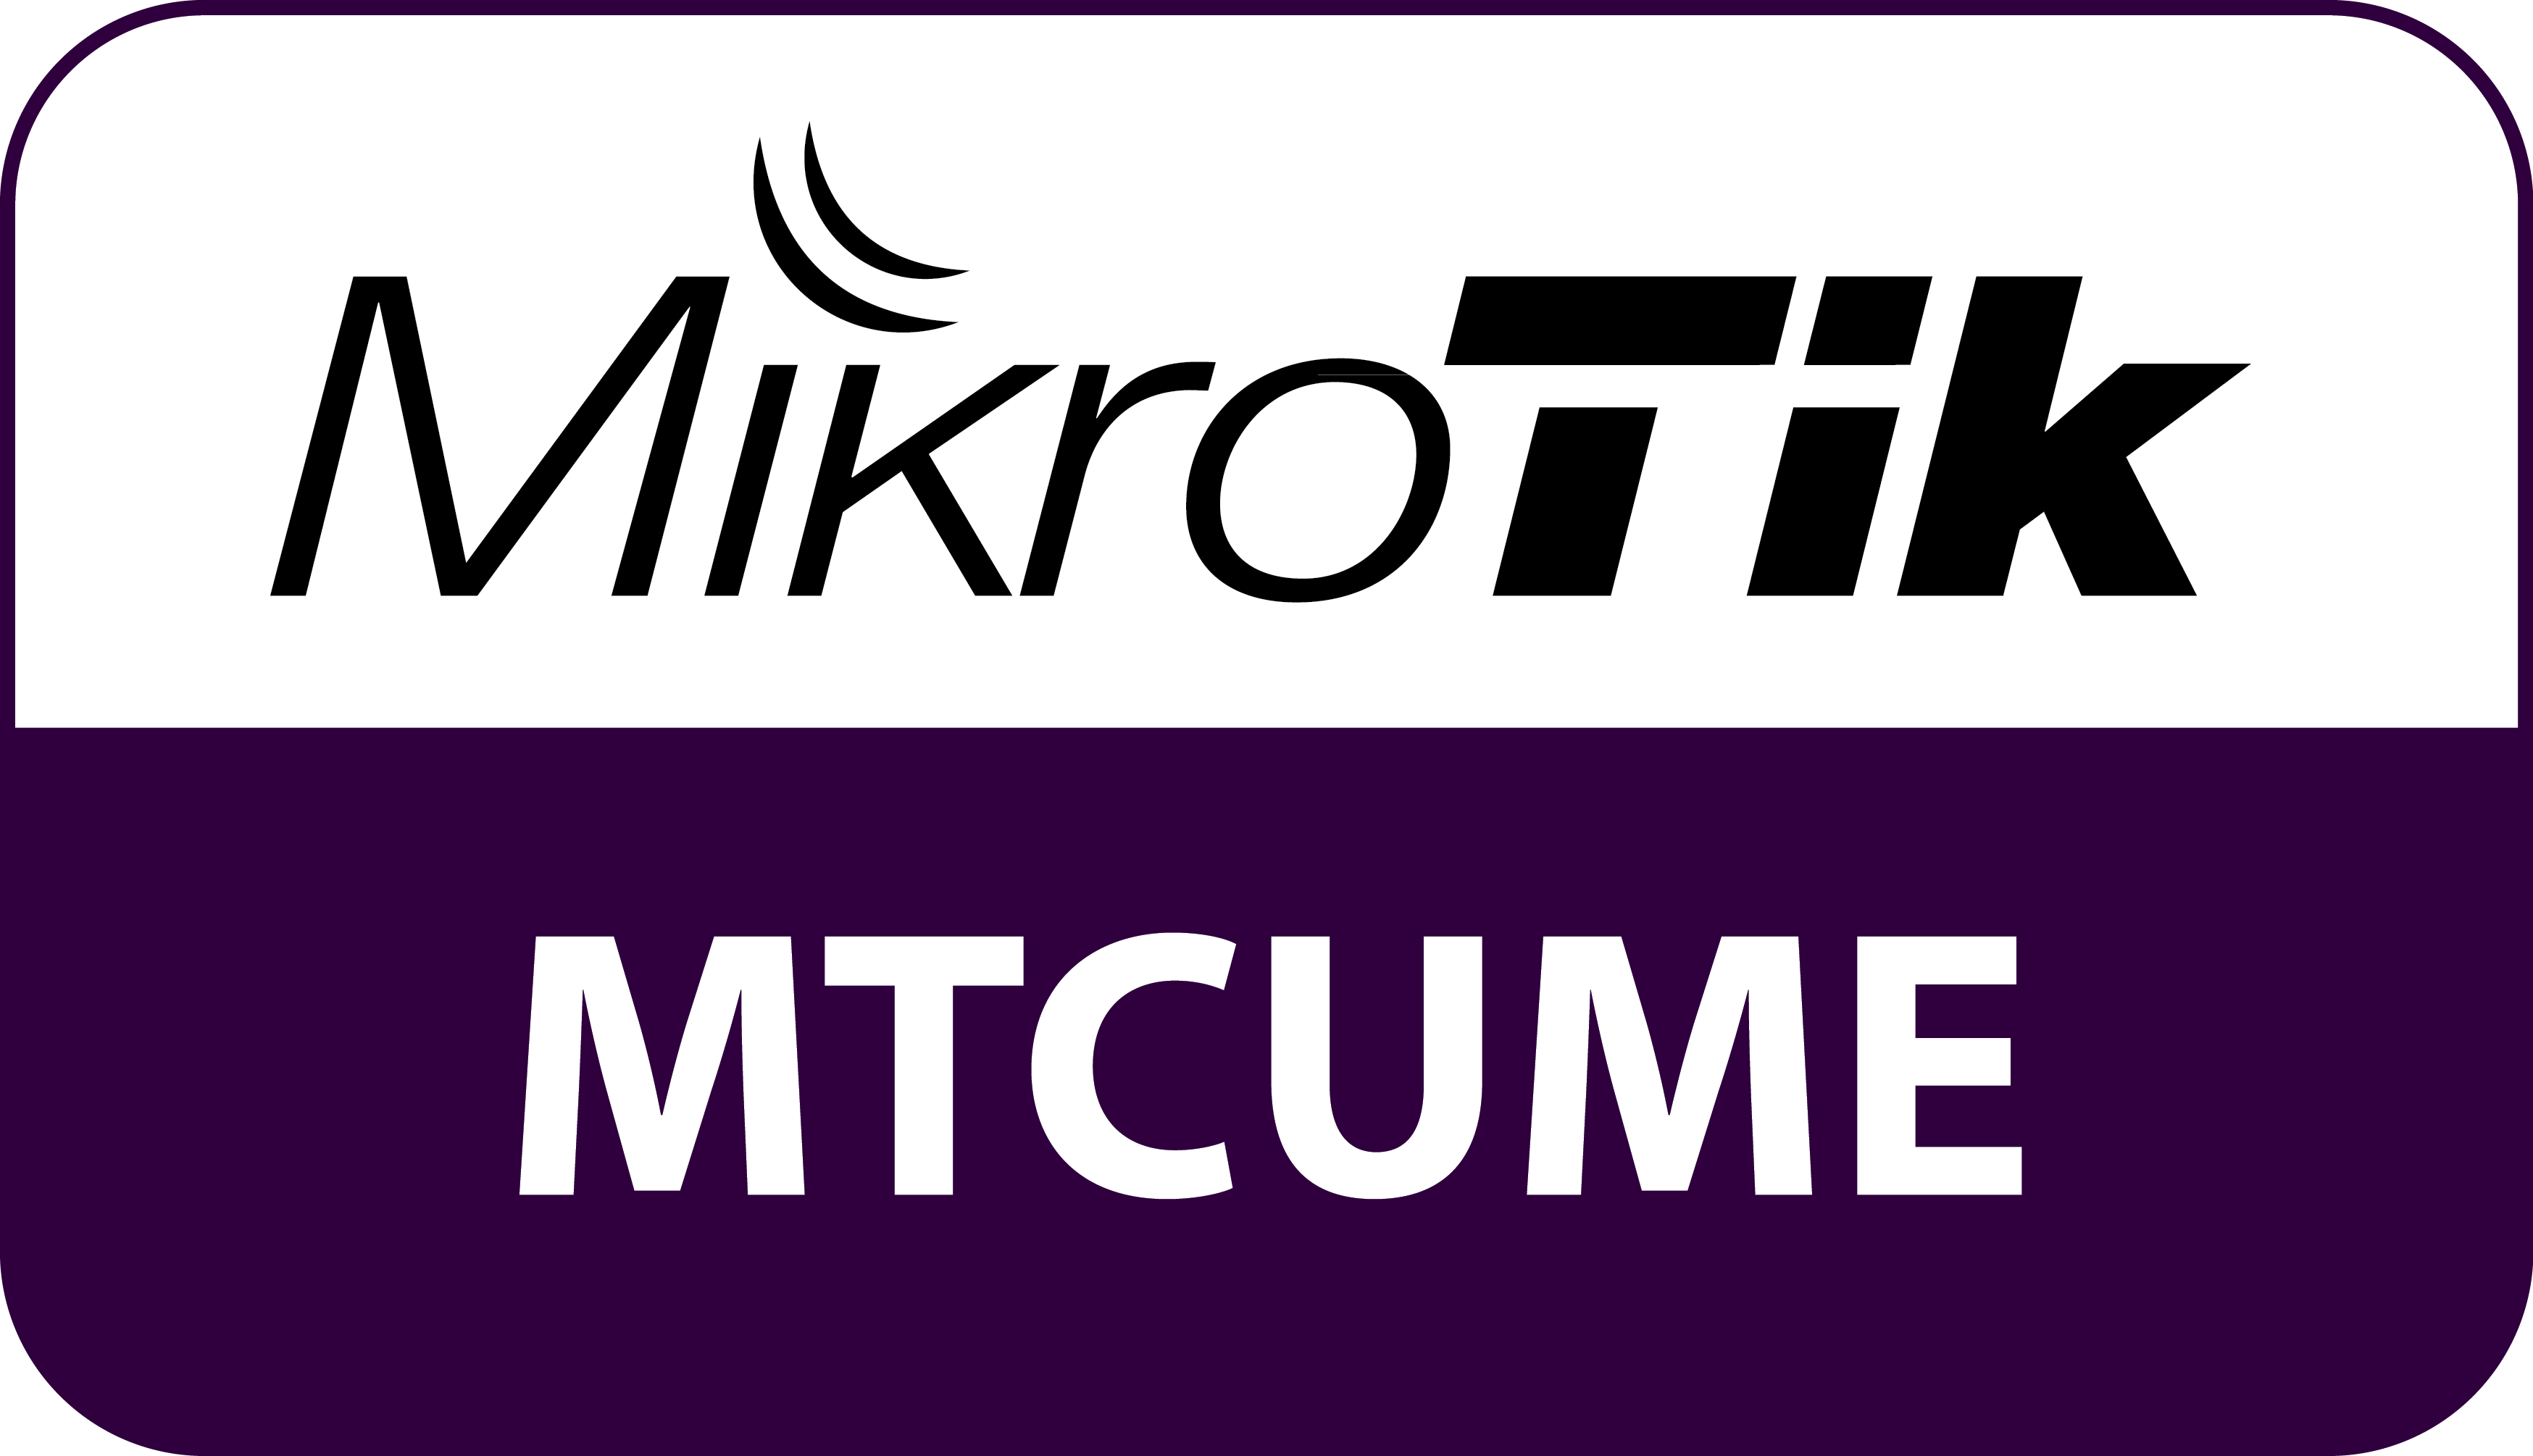 certifikace MTCUME - MikroTik Certified User Management Engineer